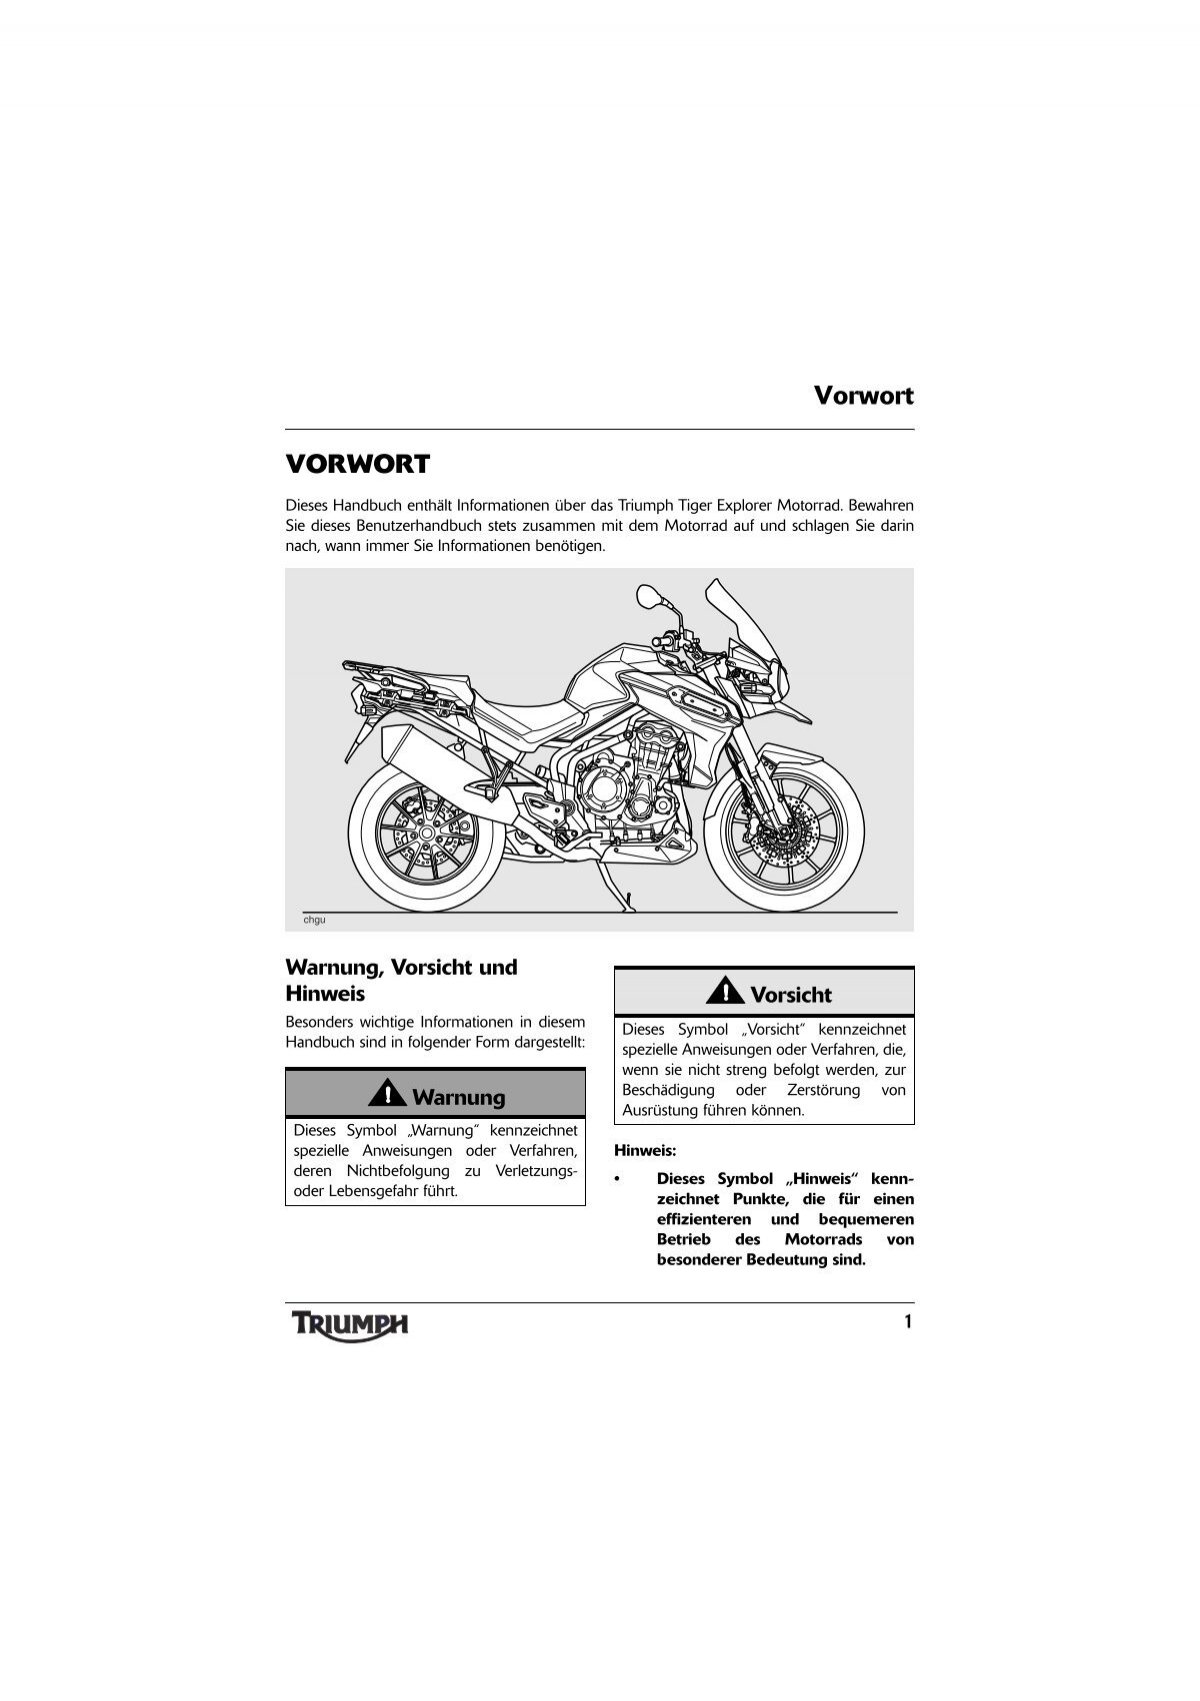 Tiger Explorer - Triumph Motorcycles - Triumph Motorräder